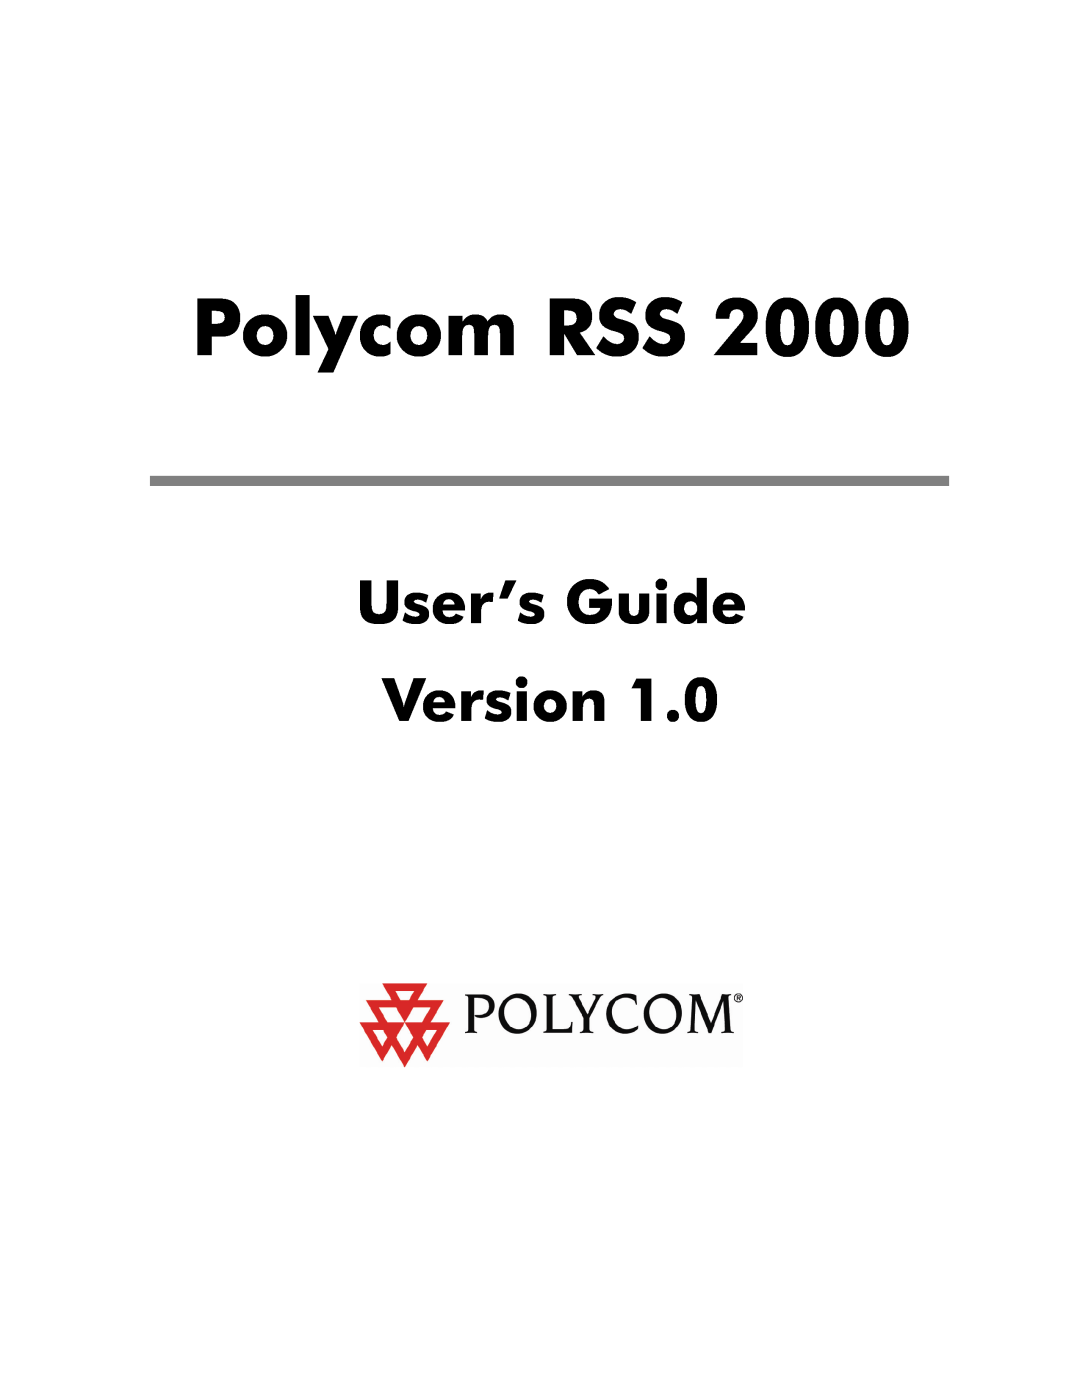 Polycom RSS 2000 manual Polycom RSS, User’s Guide Version 